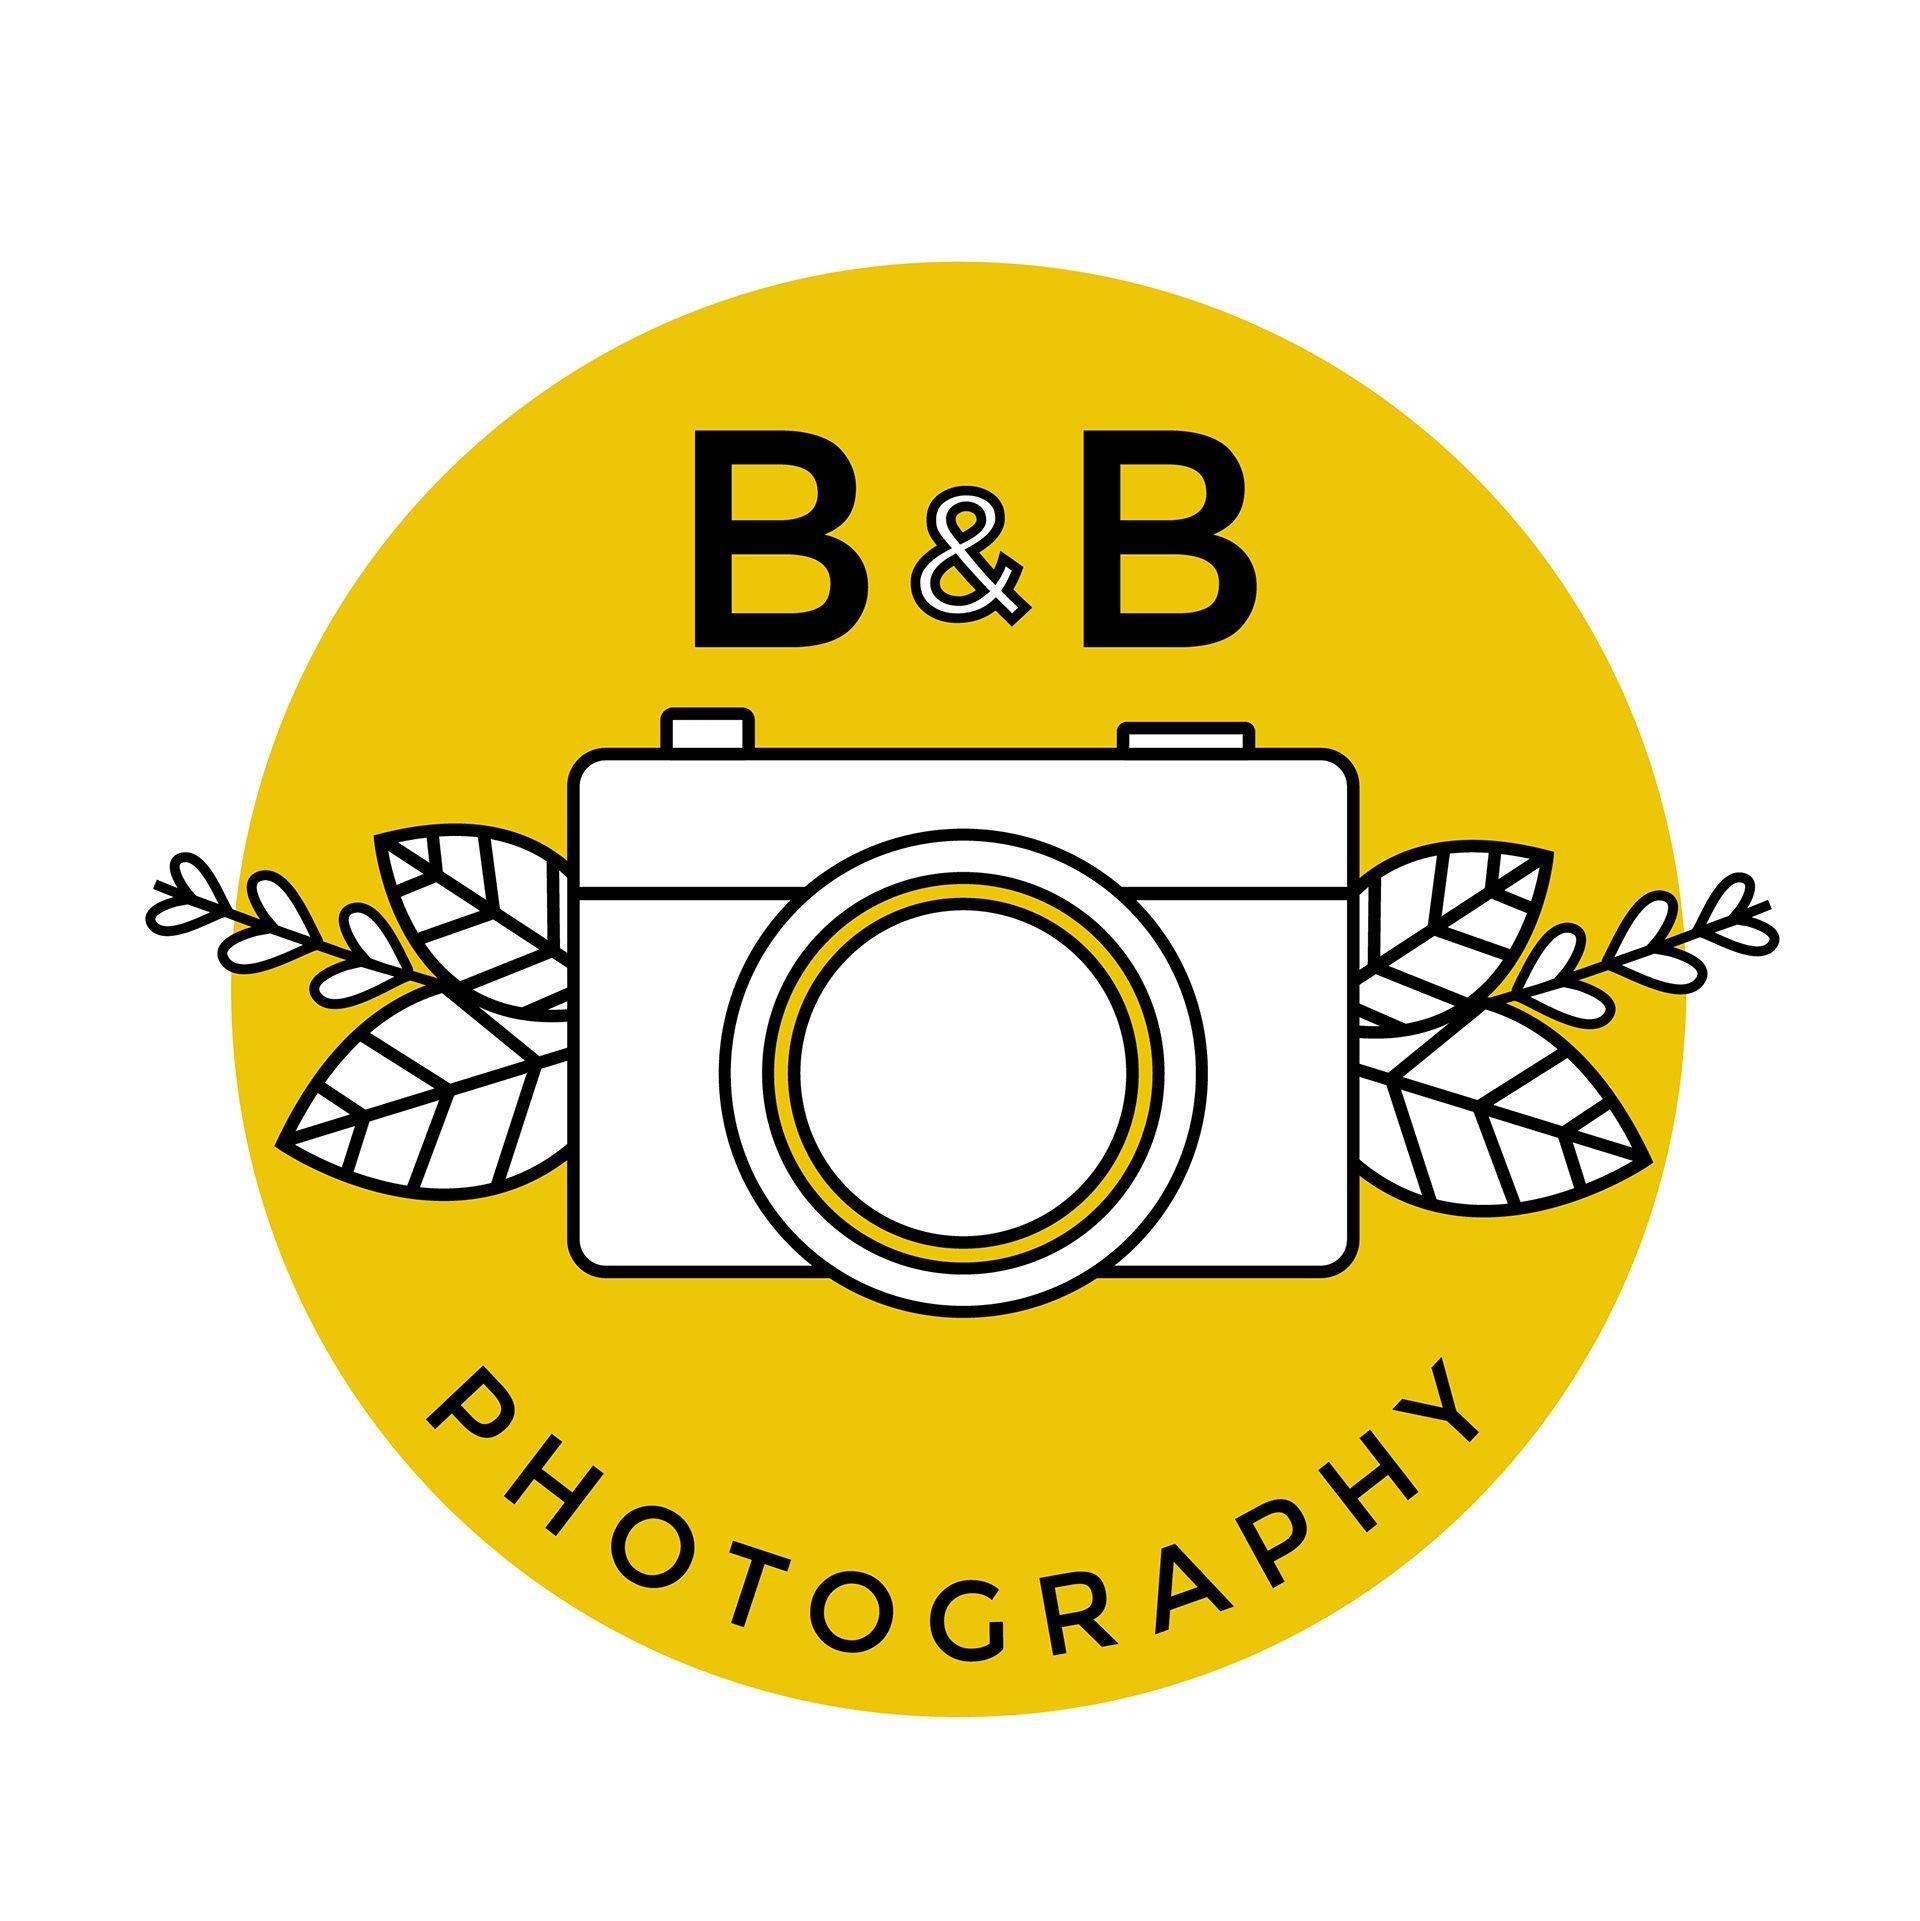 B and B in a Circle Logo - Randi Gilmore - B & B Photography Logo